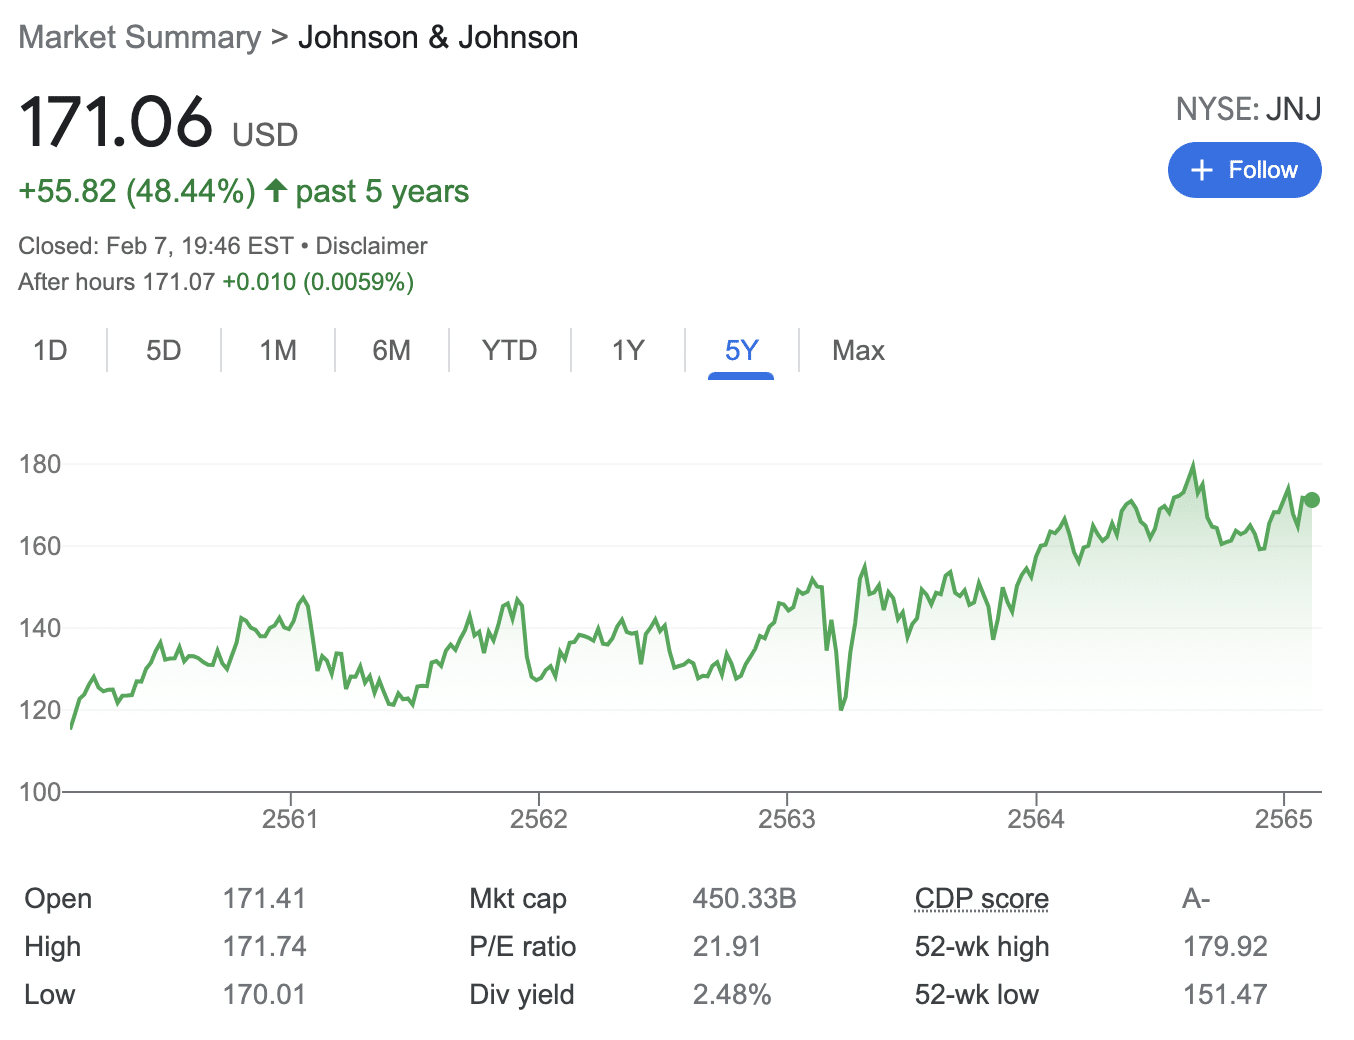 Johnson & Johnson stock price today